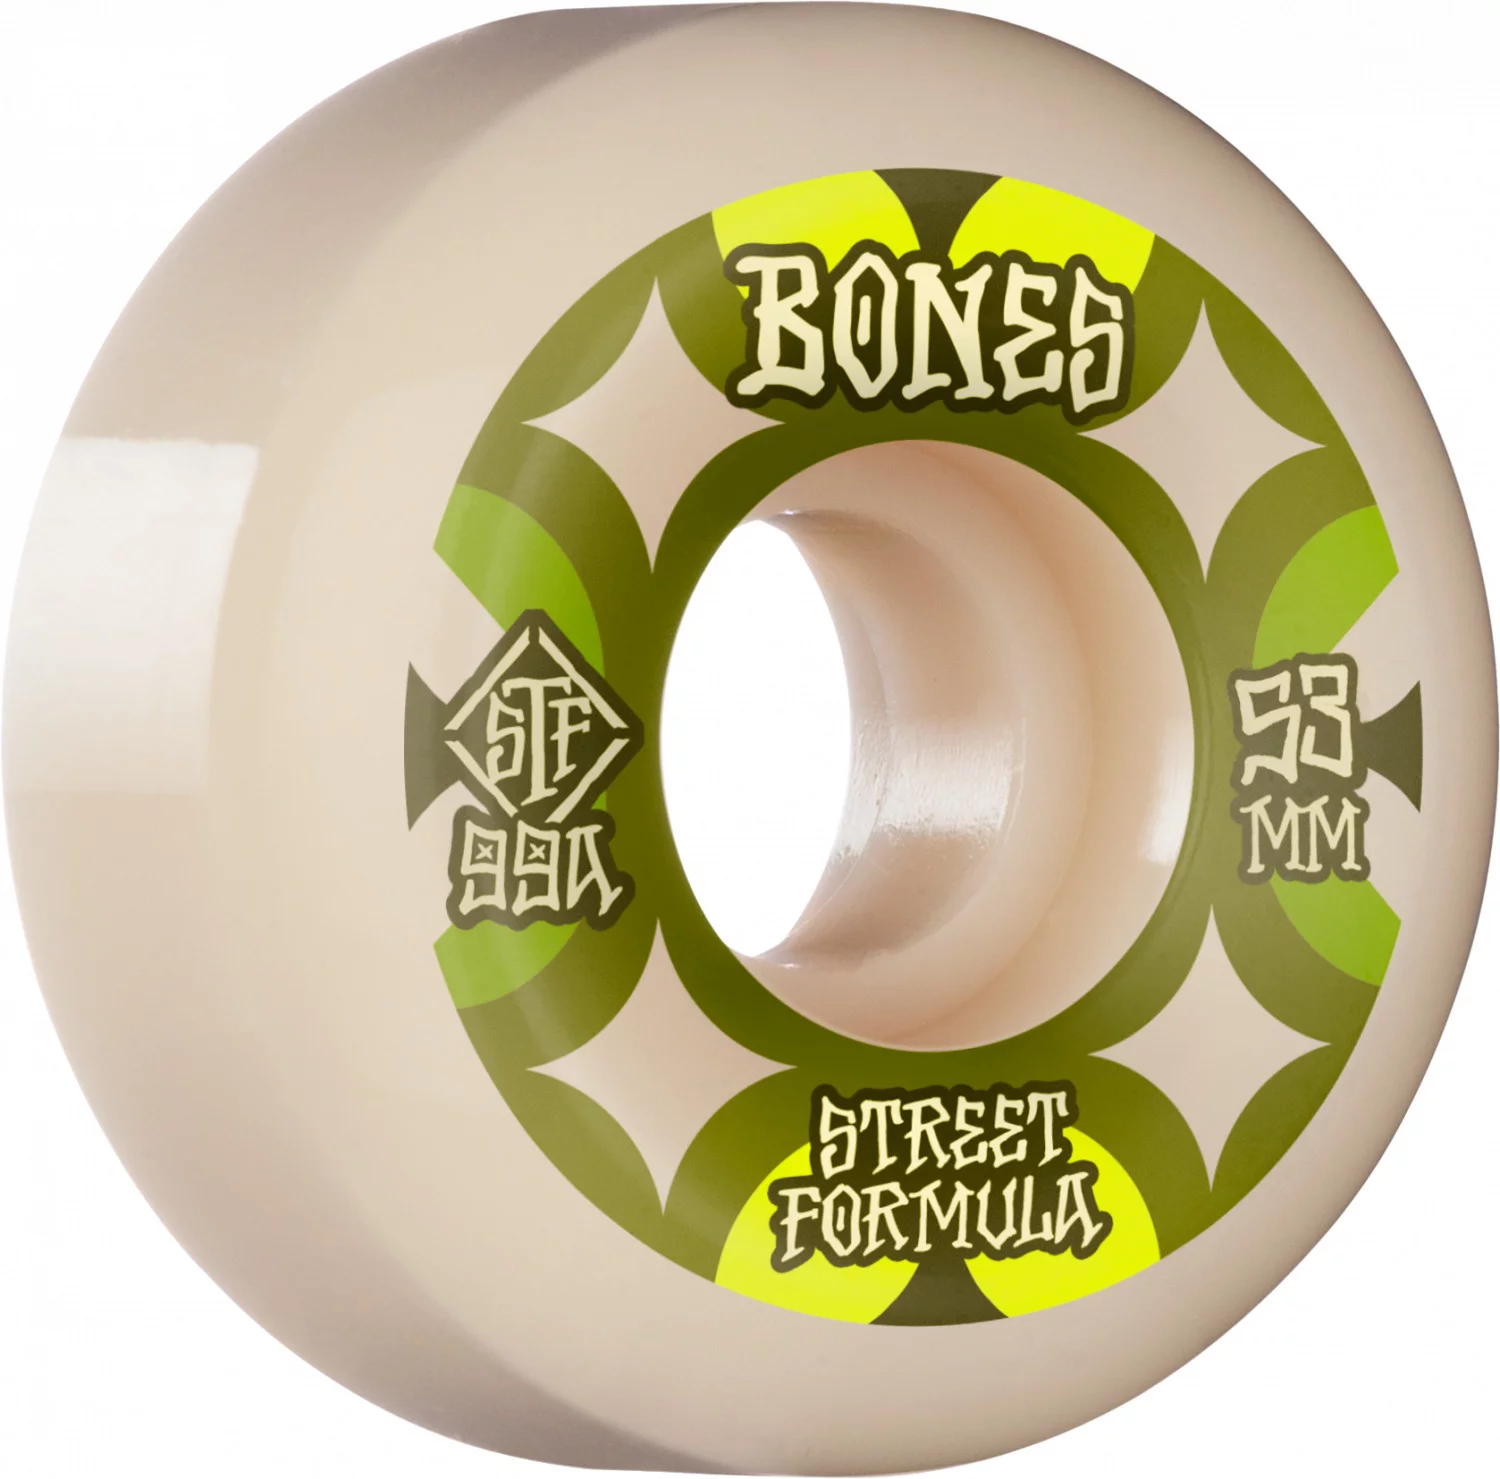 Bones STF V5 Sidecuts Skateboard Wheels - retros (99a) | Tactics